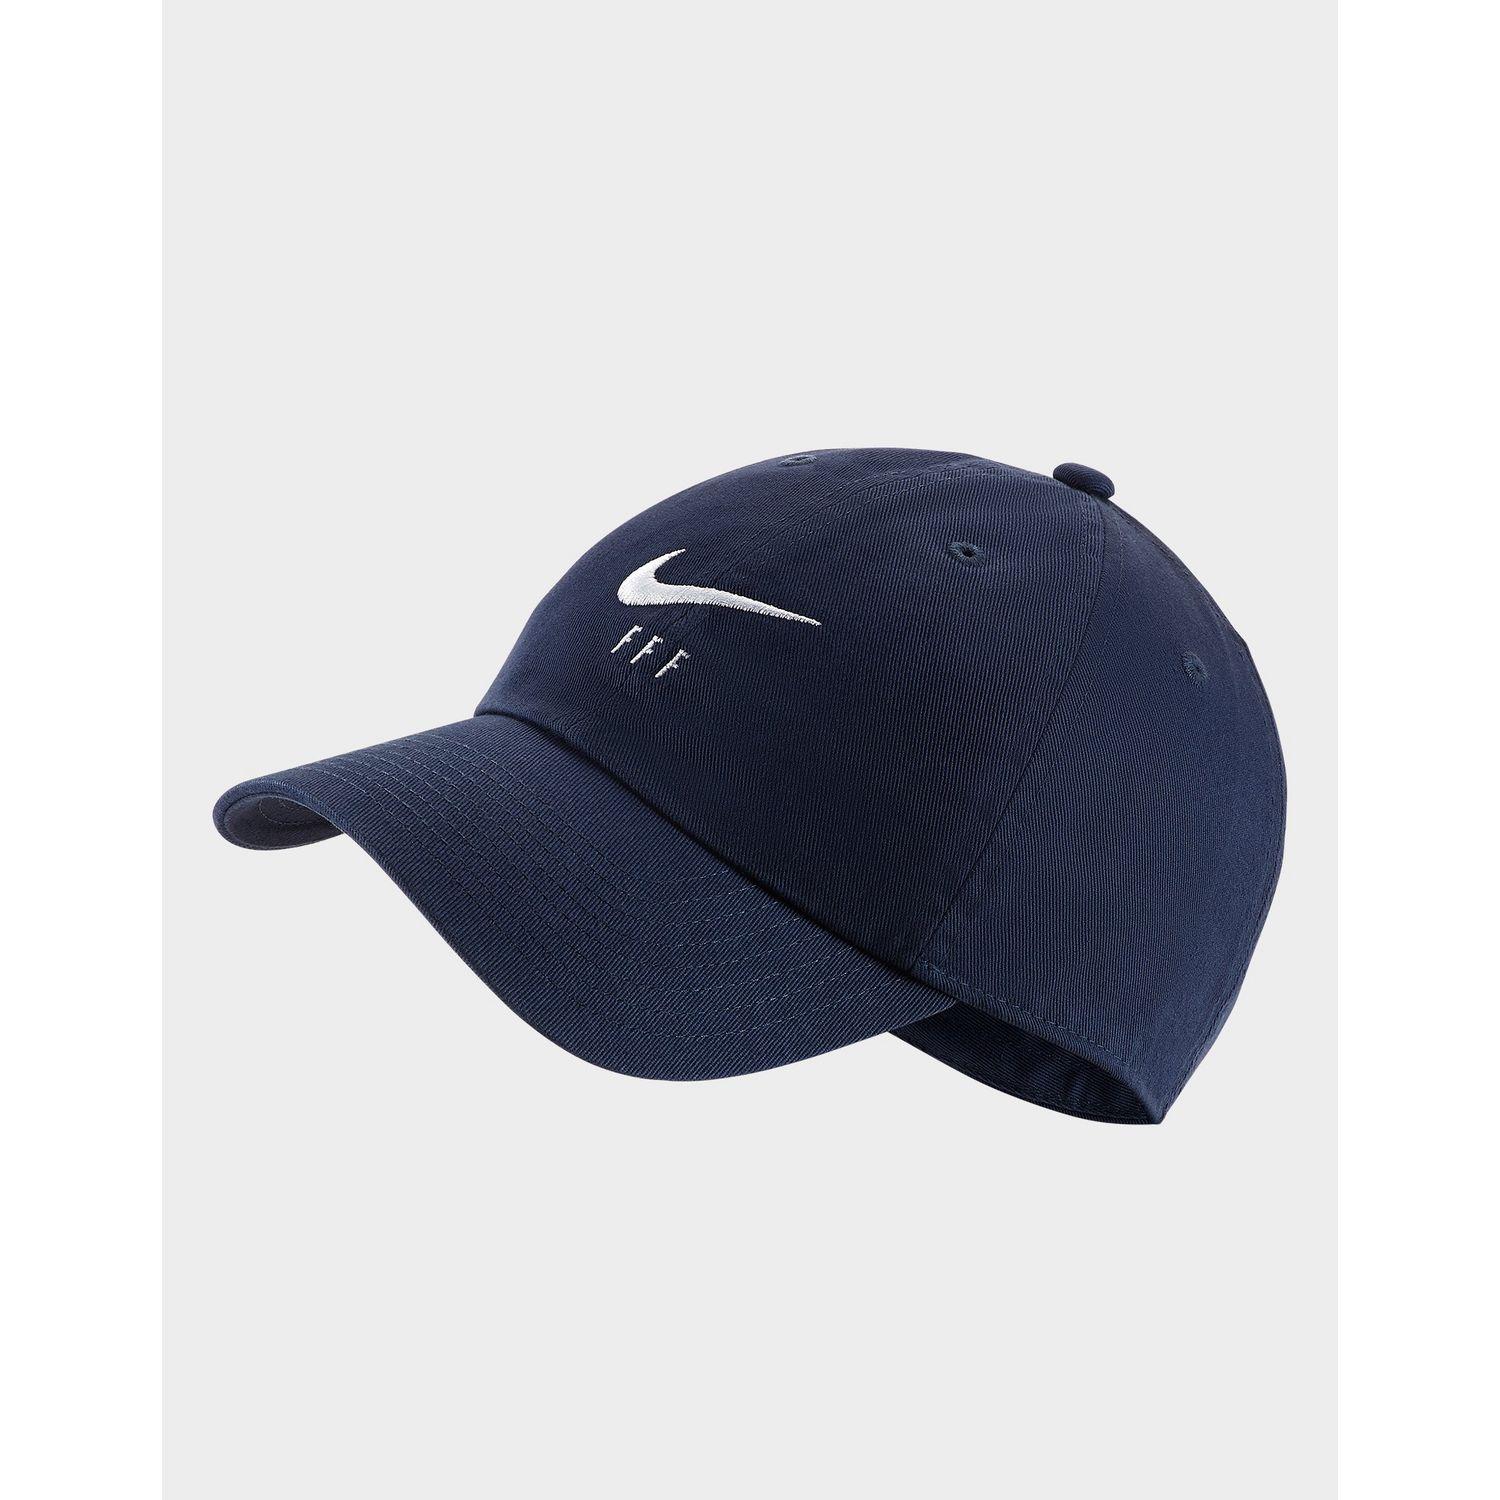 Nike Fff Heritage86 Adjustable Football Hat in Blue for Men - Lyst